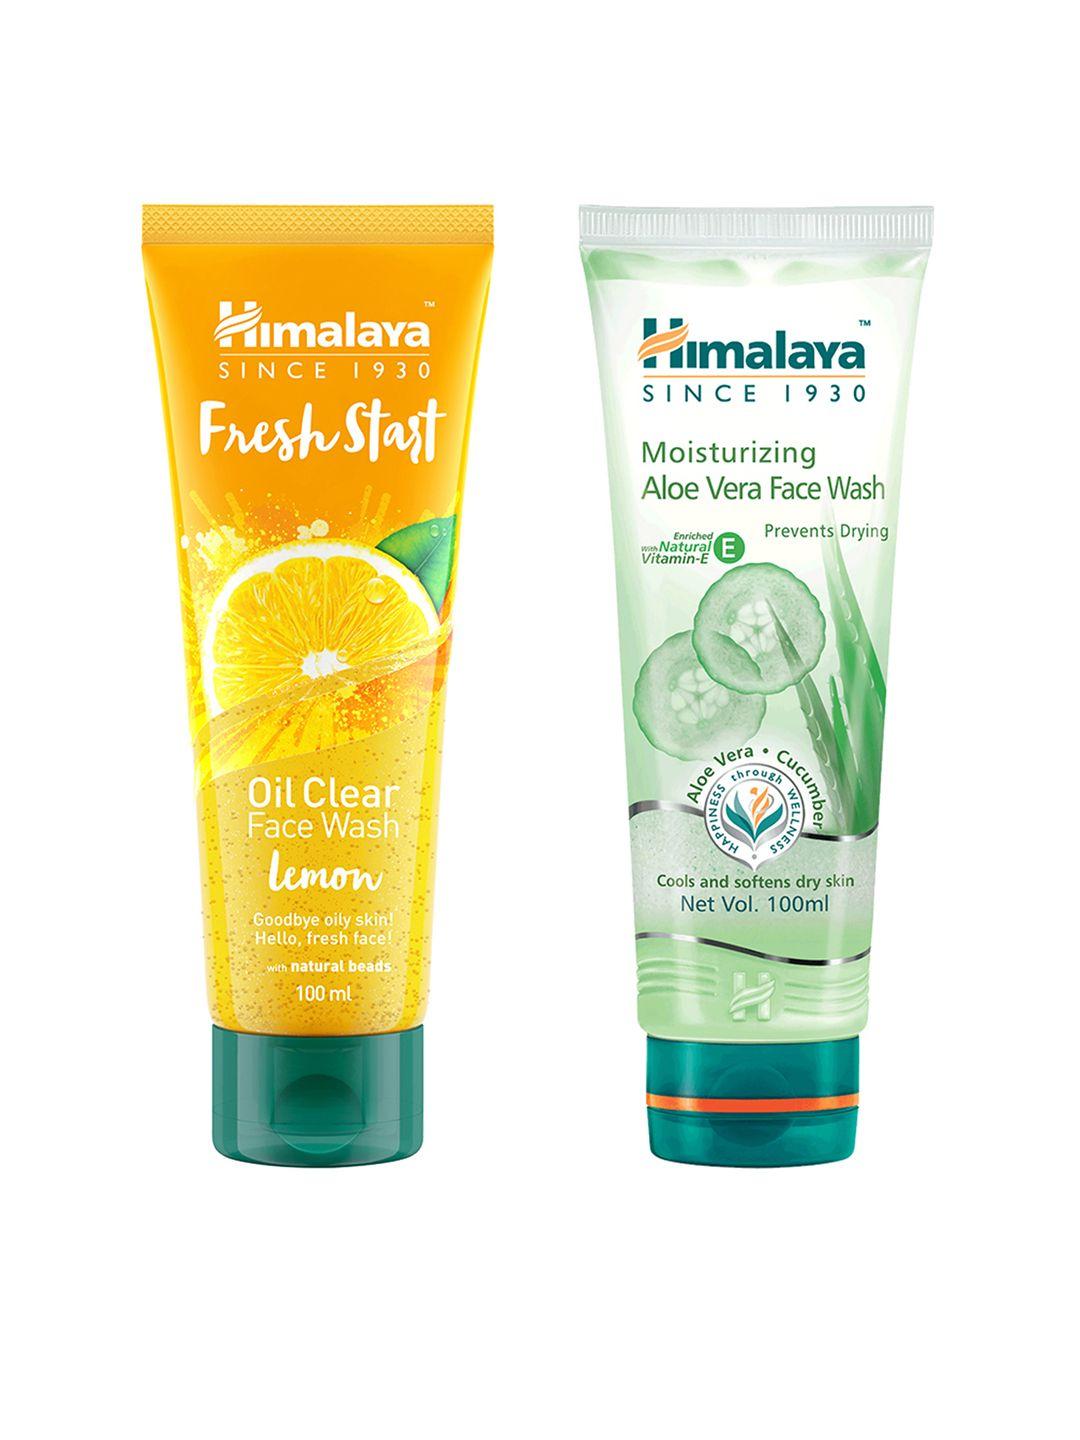 himalaya set of 2 face wash - fresh start oil clear lemon & moisturizing aloe vera